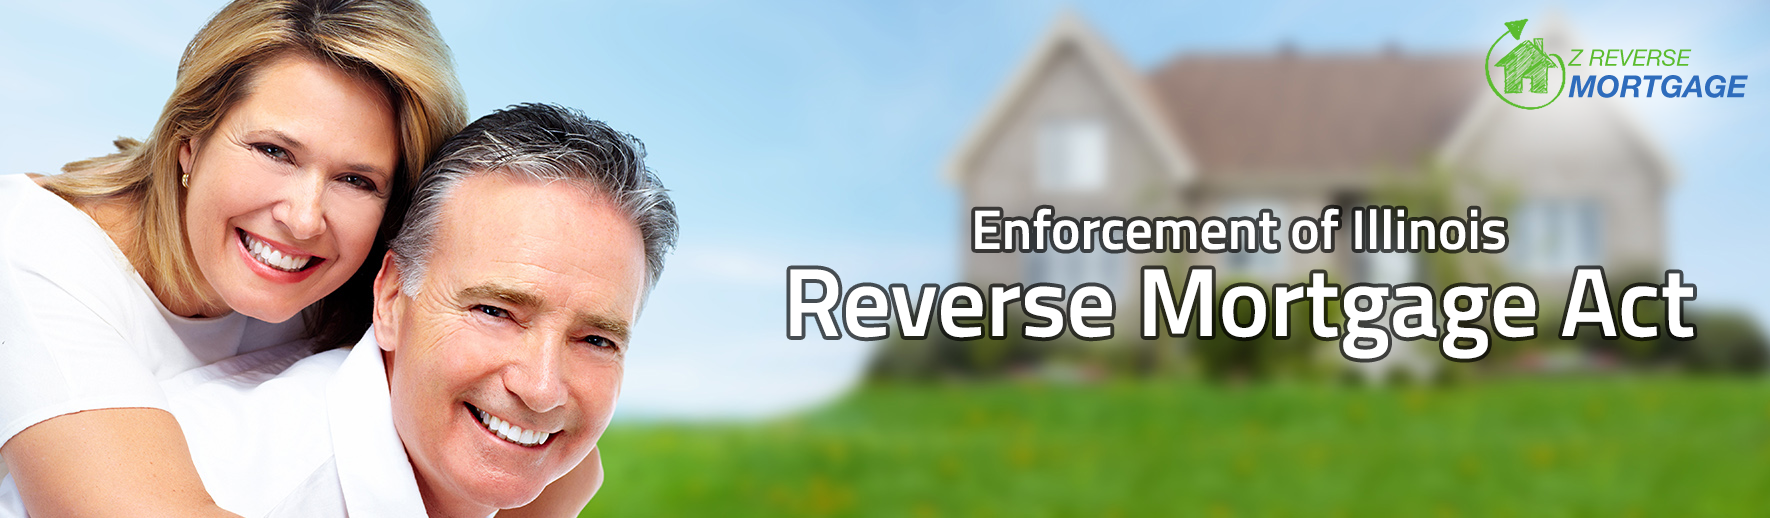 illinois reverse mortgage act